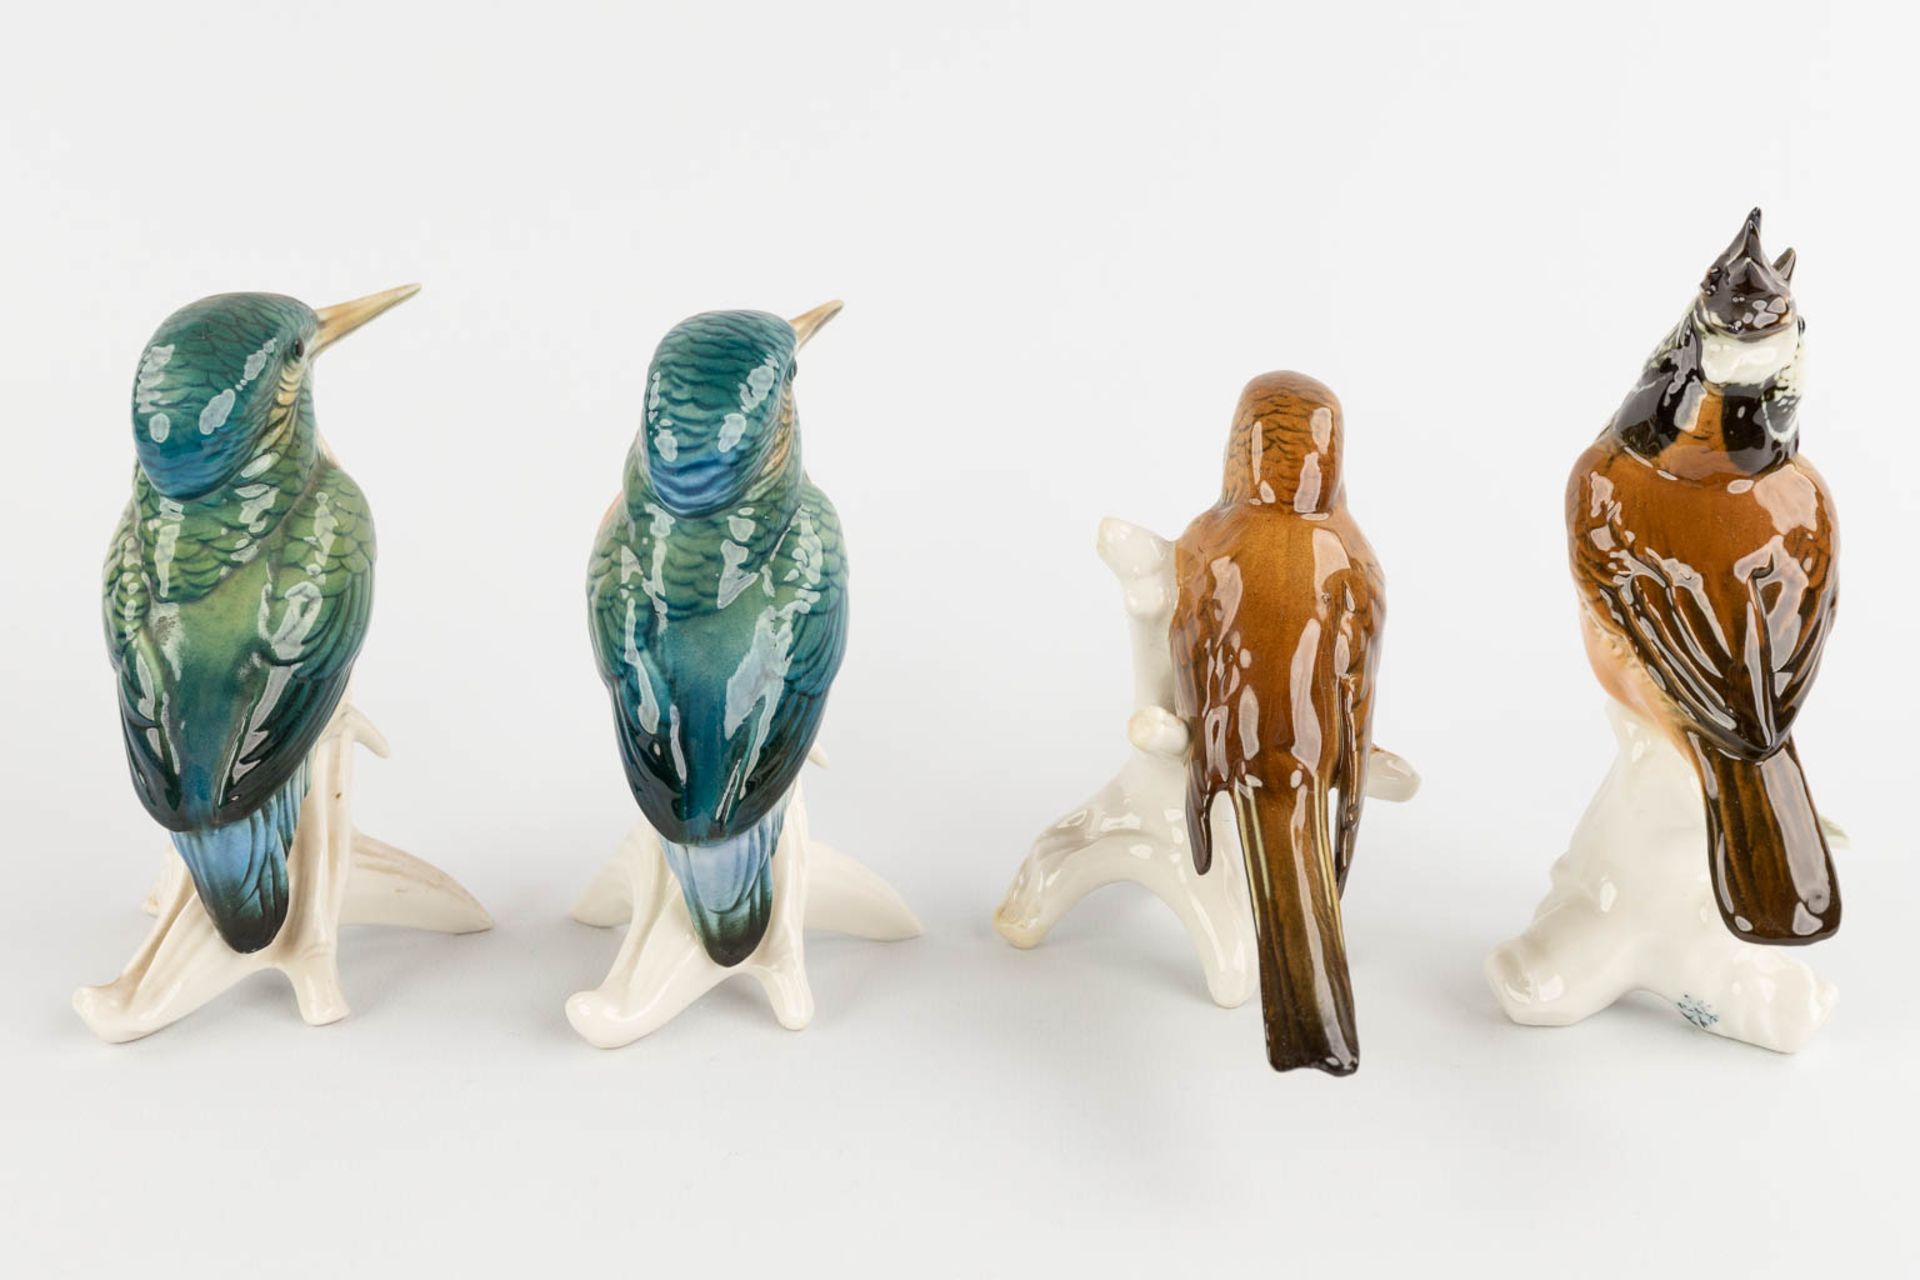 Karl ENS Porzellan, 8 birds, polychrome porcelain. 20th C. (H:19 cm) - Image 11 of 15